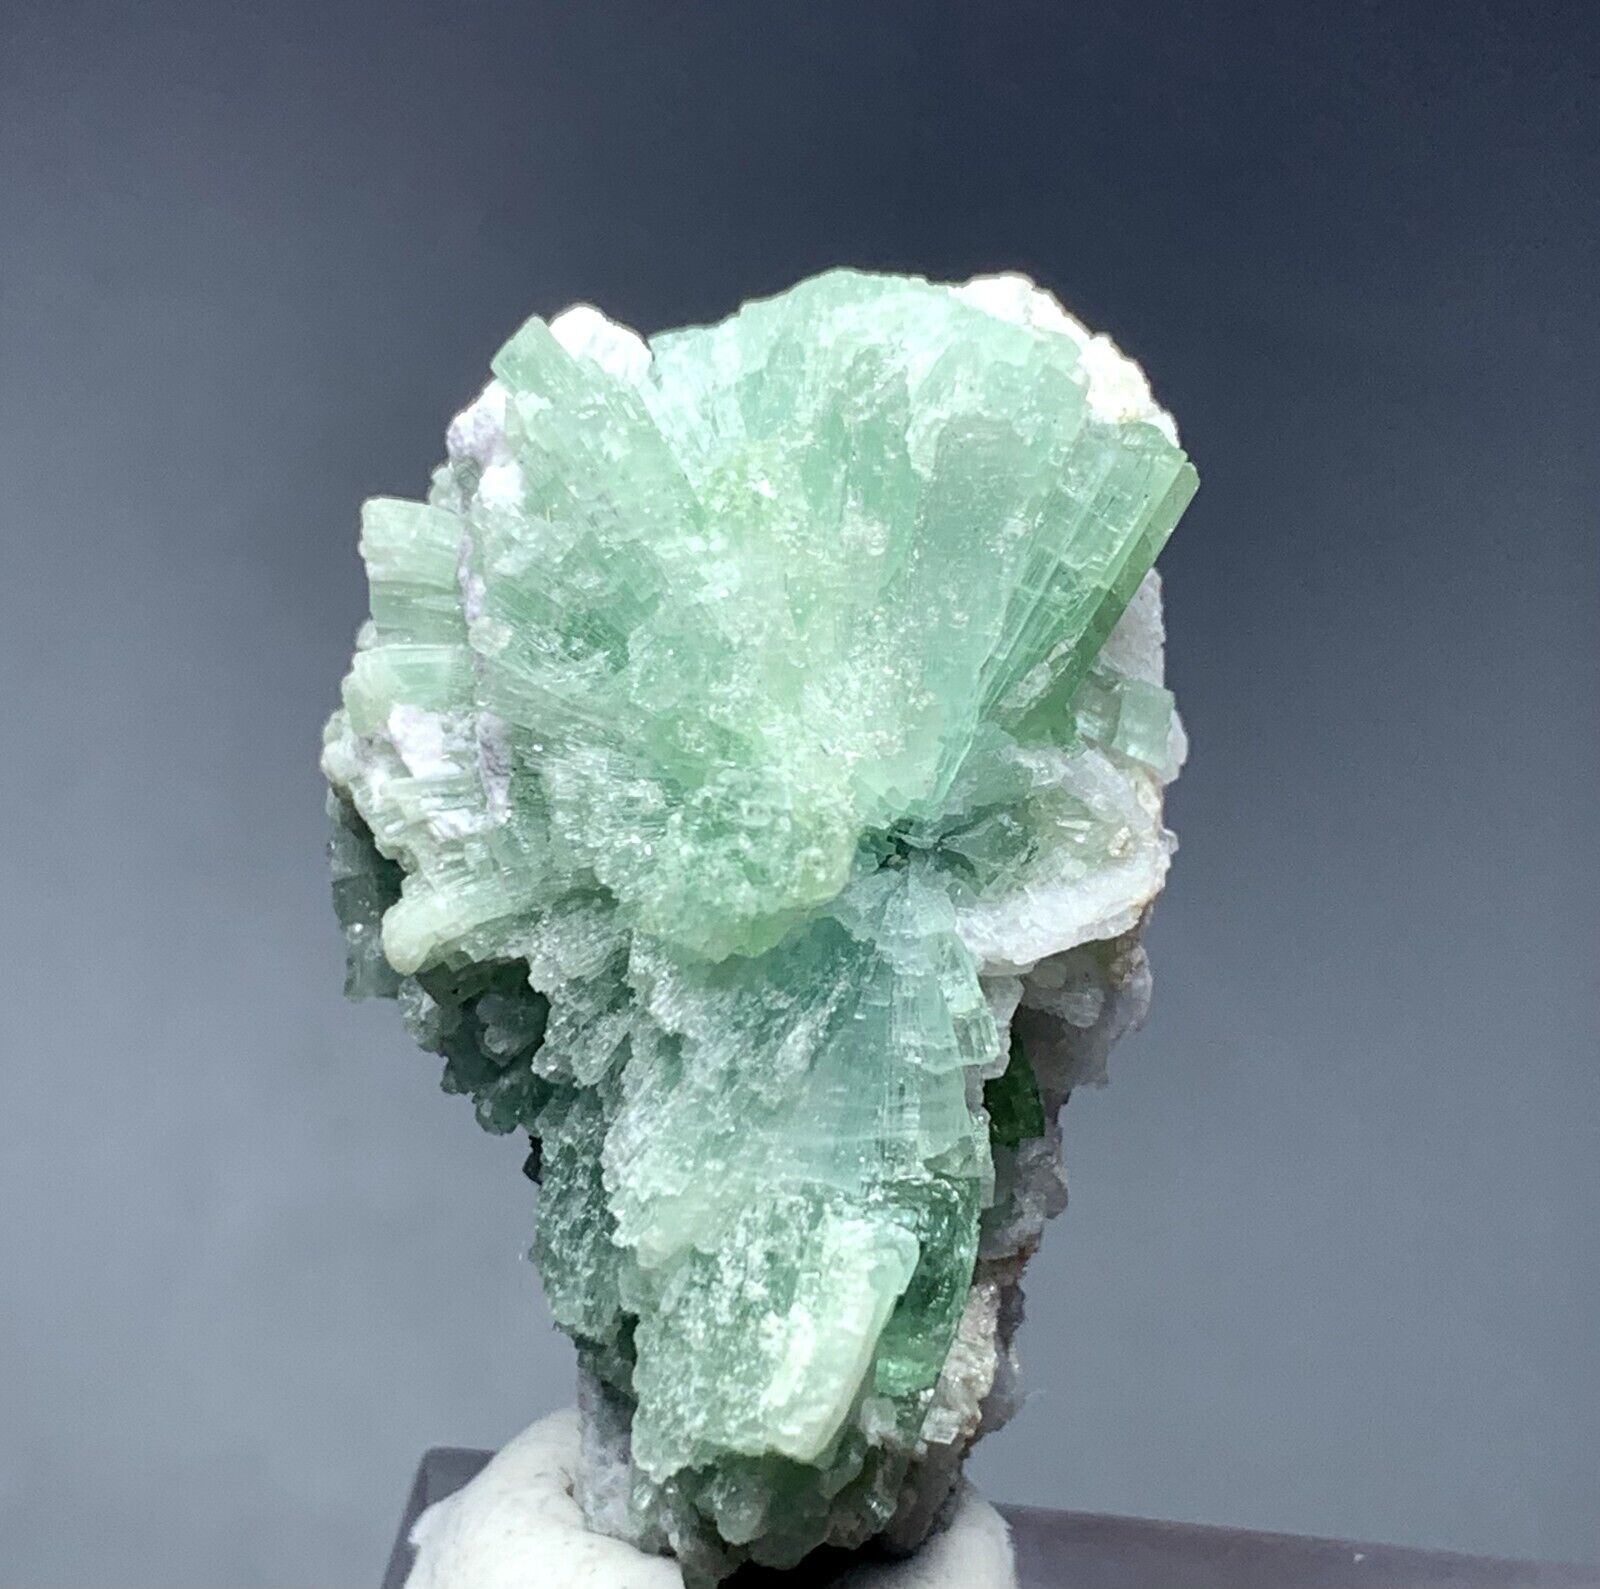 116 Cts Natural Green Tourmaline With Feldspar Crystal Specimen From Afghanistan